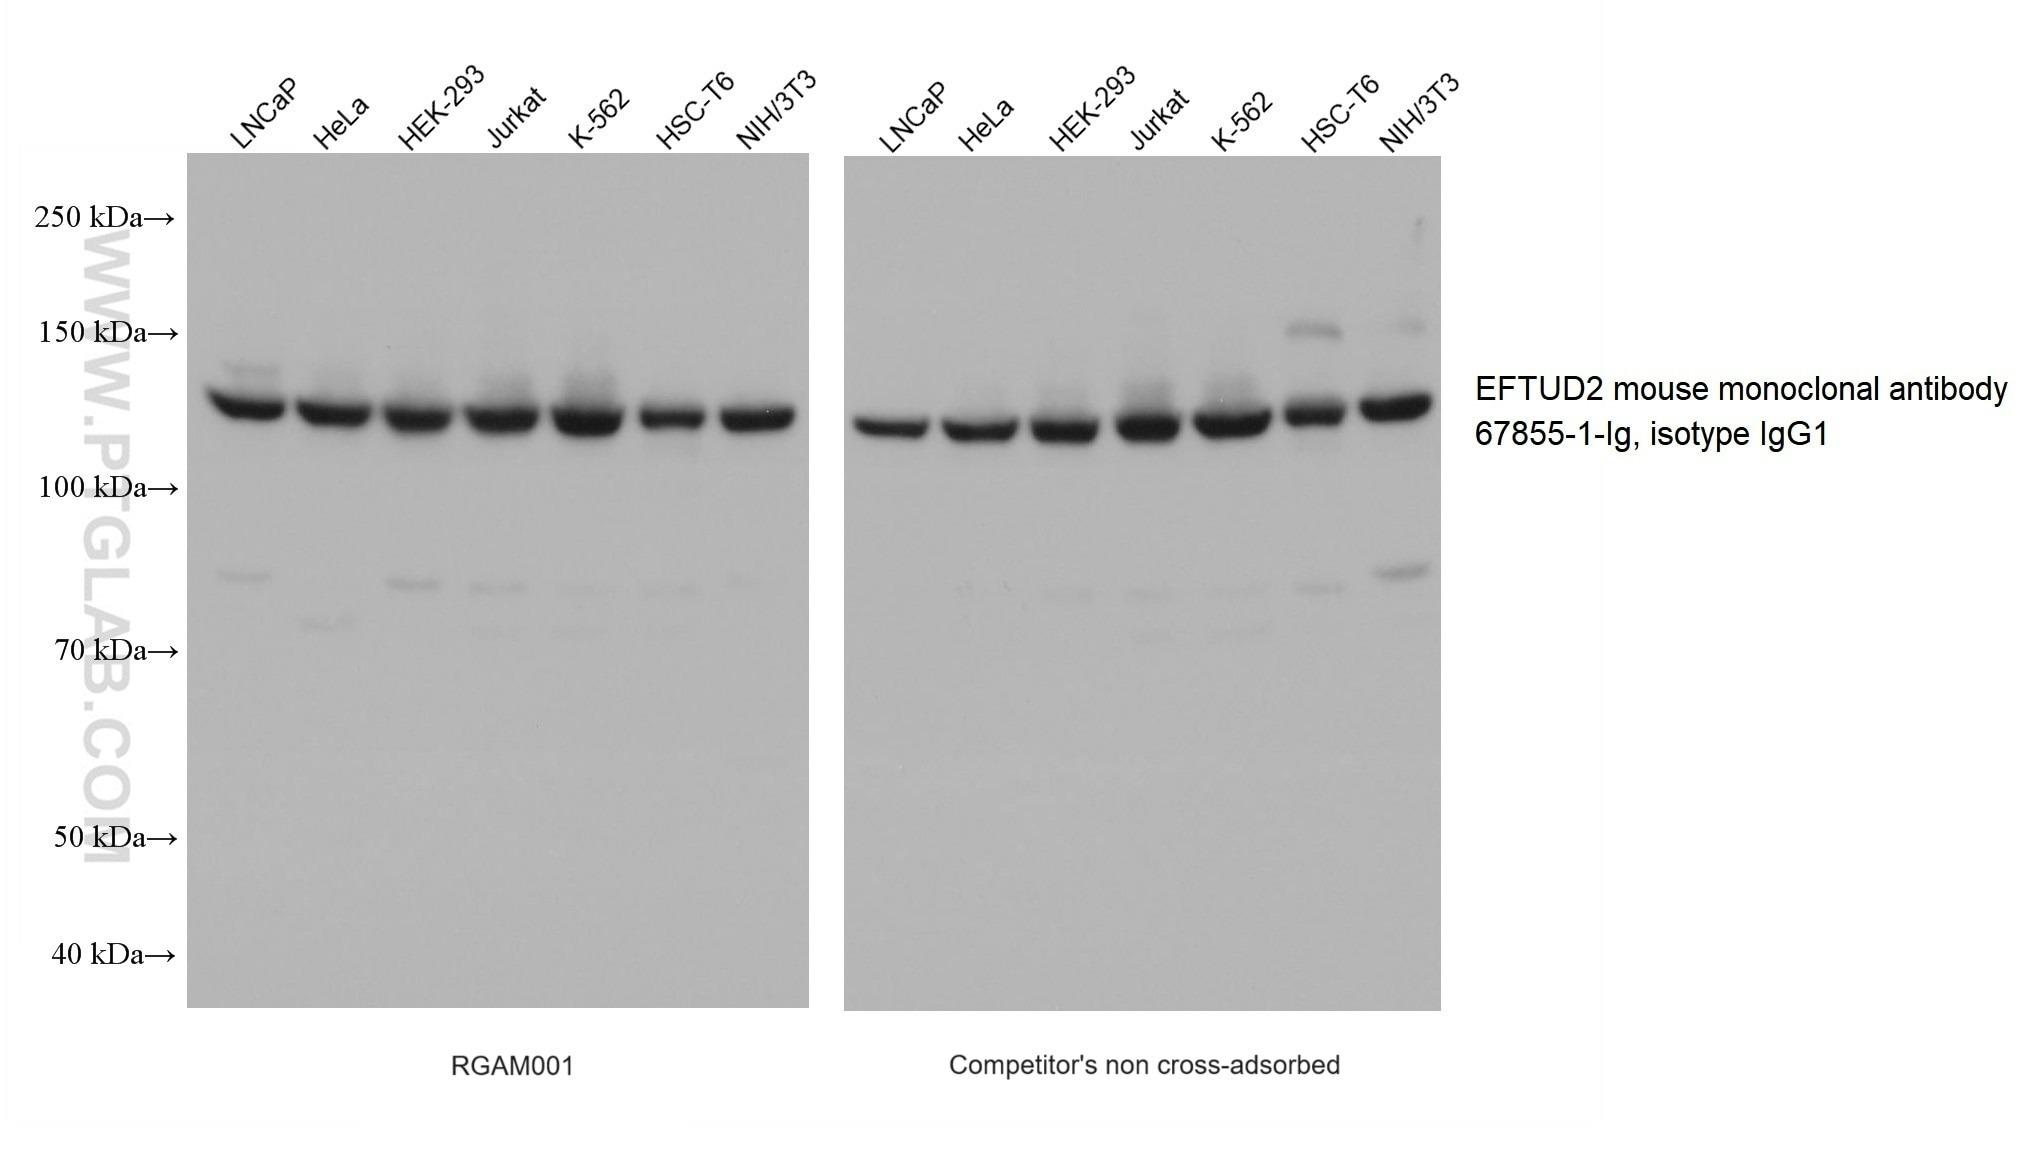 Multi-rAb HRP標識抗マウスIgG二次抗体と競合他社製品（非吸着処理製品）を用いたBeta Actinの化学発光ウェスタンブロット（WB）結果の比較